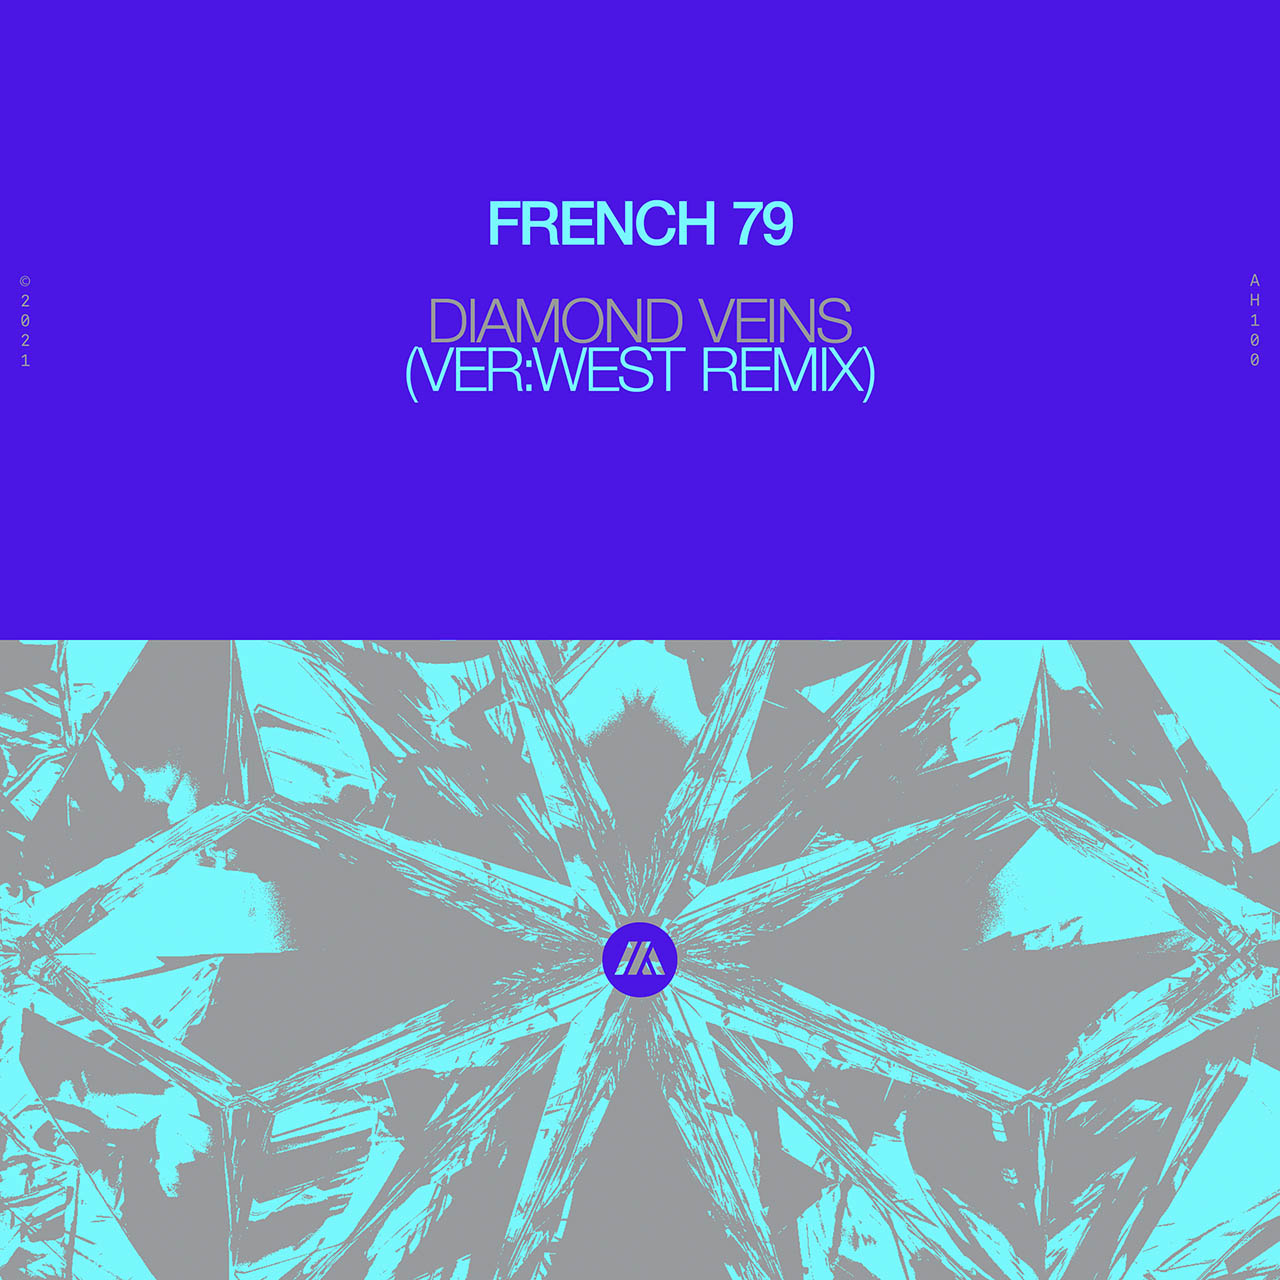 French remix